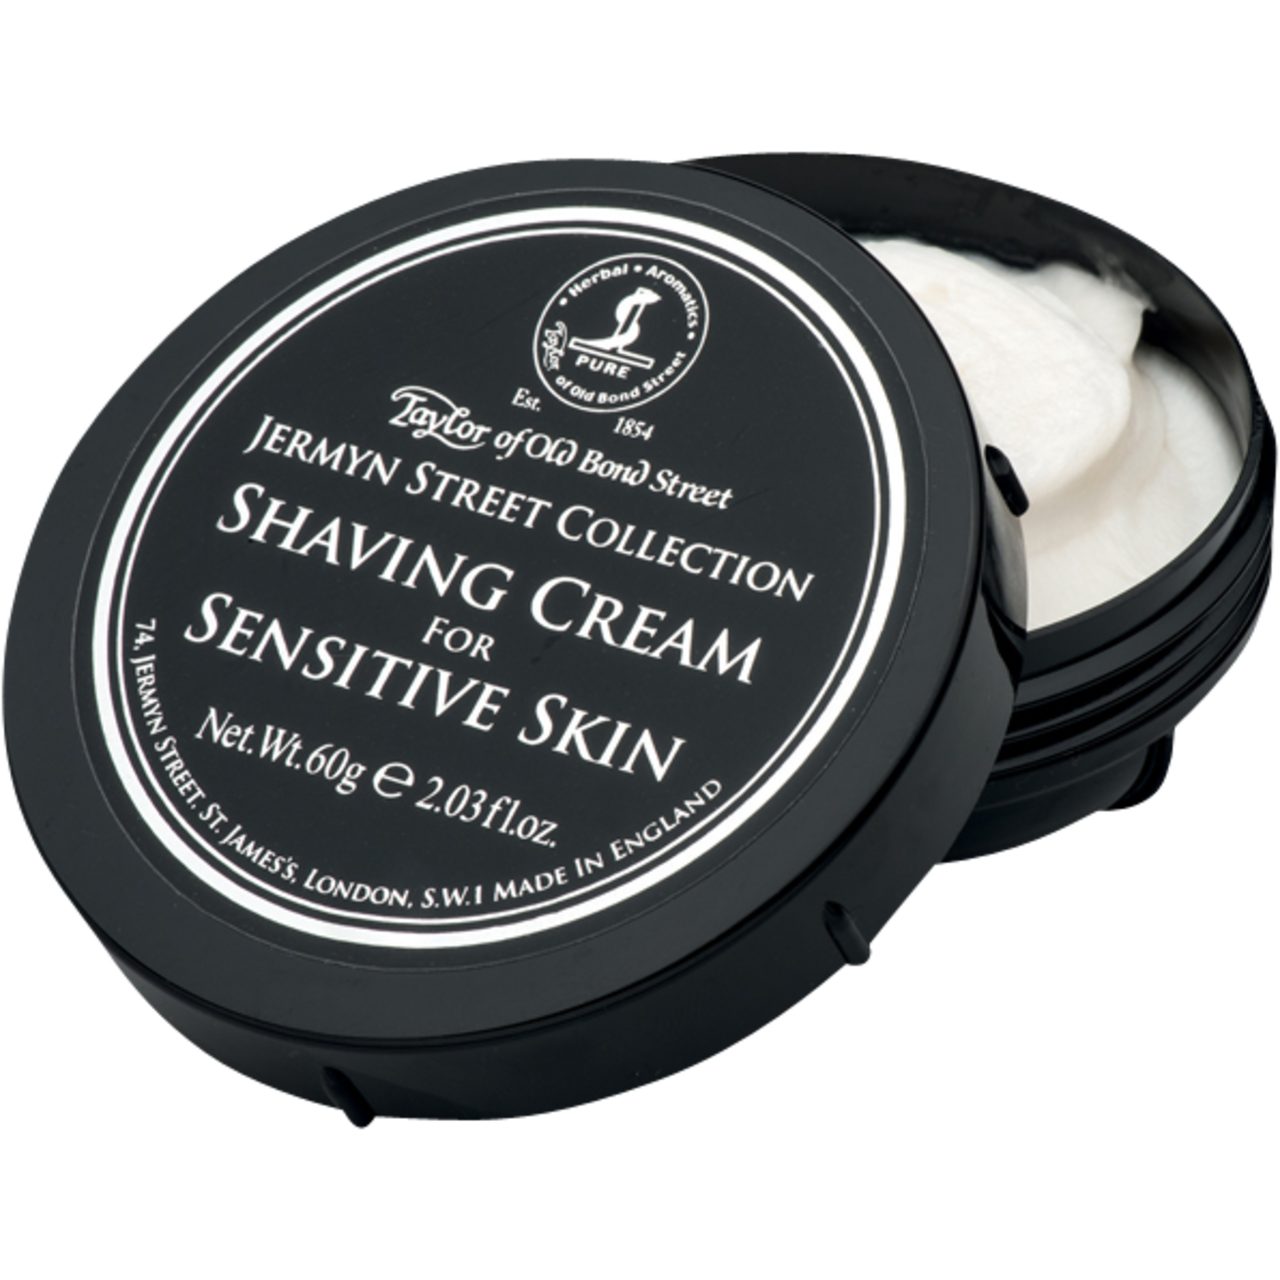 Jermyn Bond Cream Skin sensitive Old of Shaving Collection Street Rasiercreme for Taylor Street